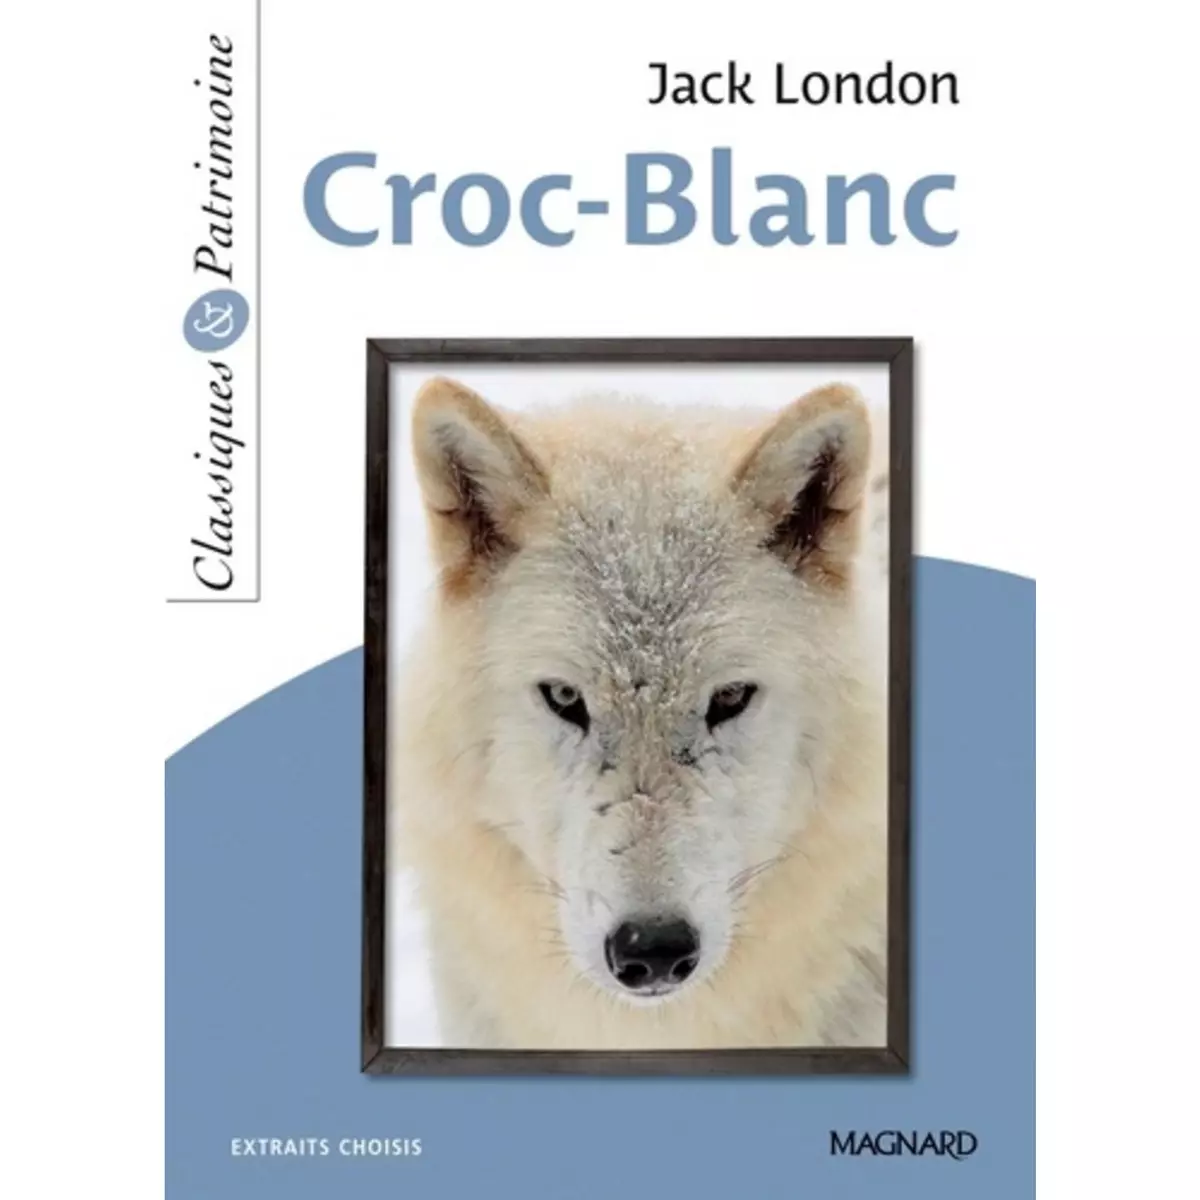  CROC-BLANC, London Jack